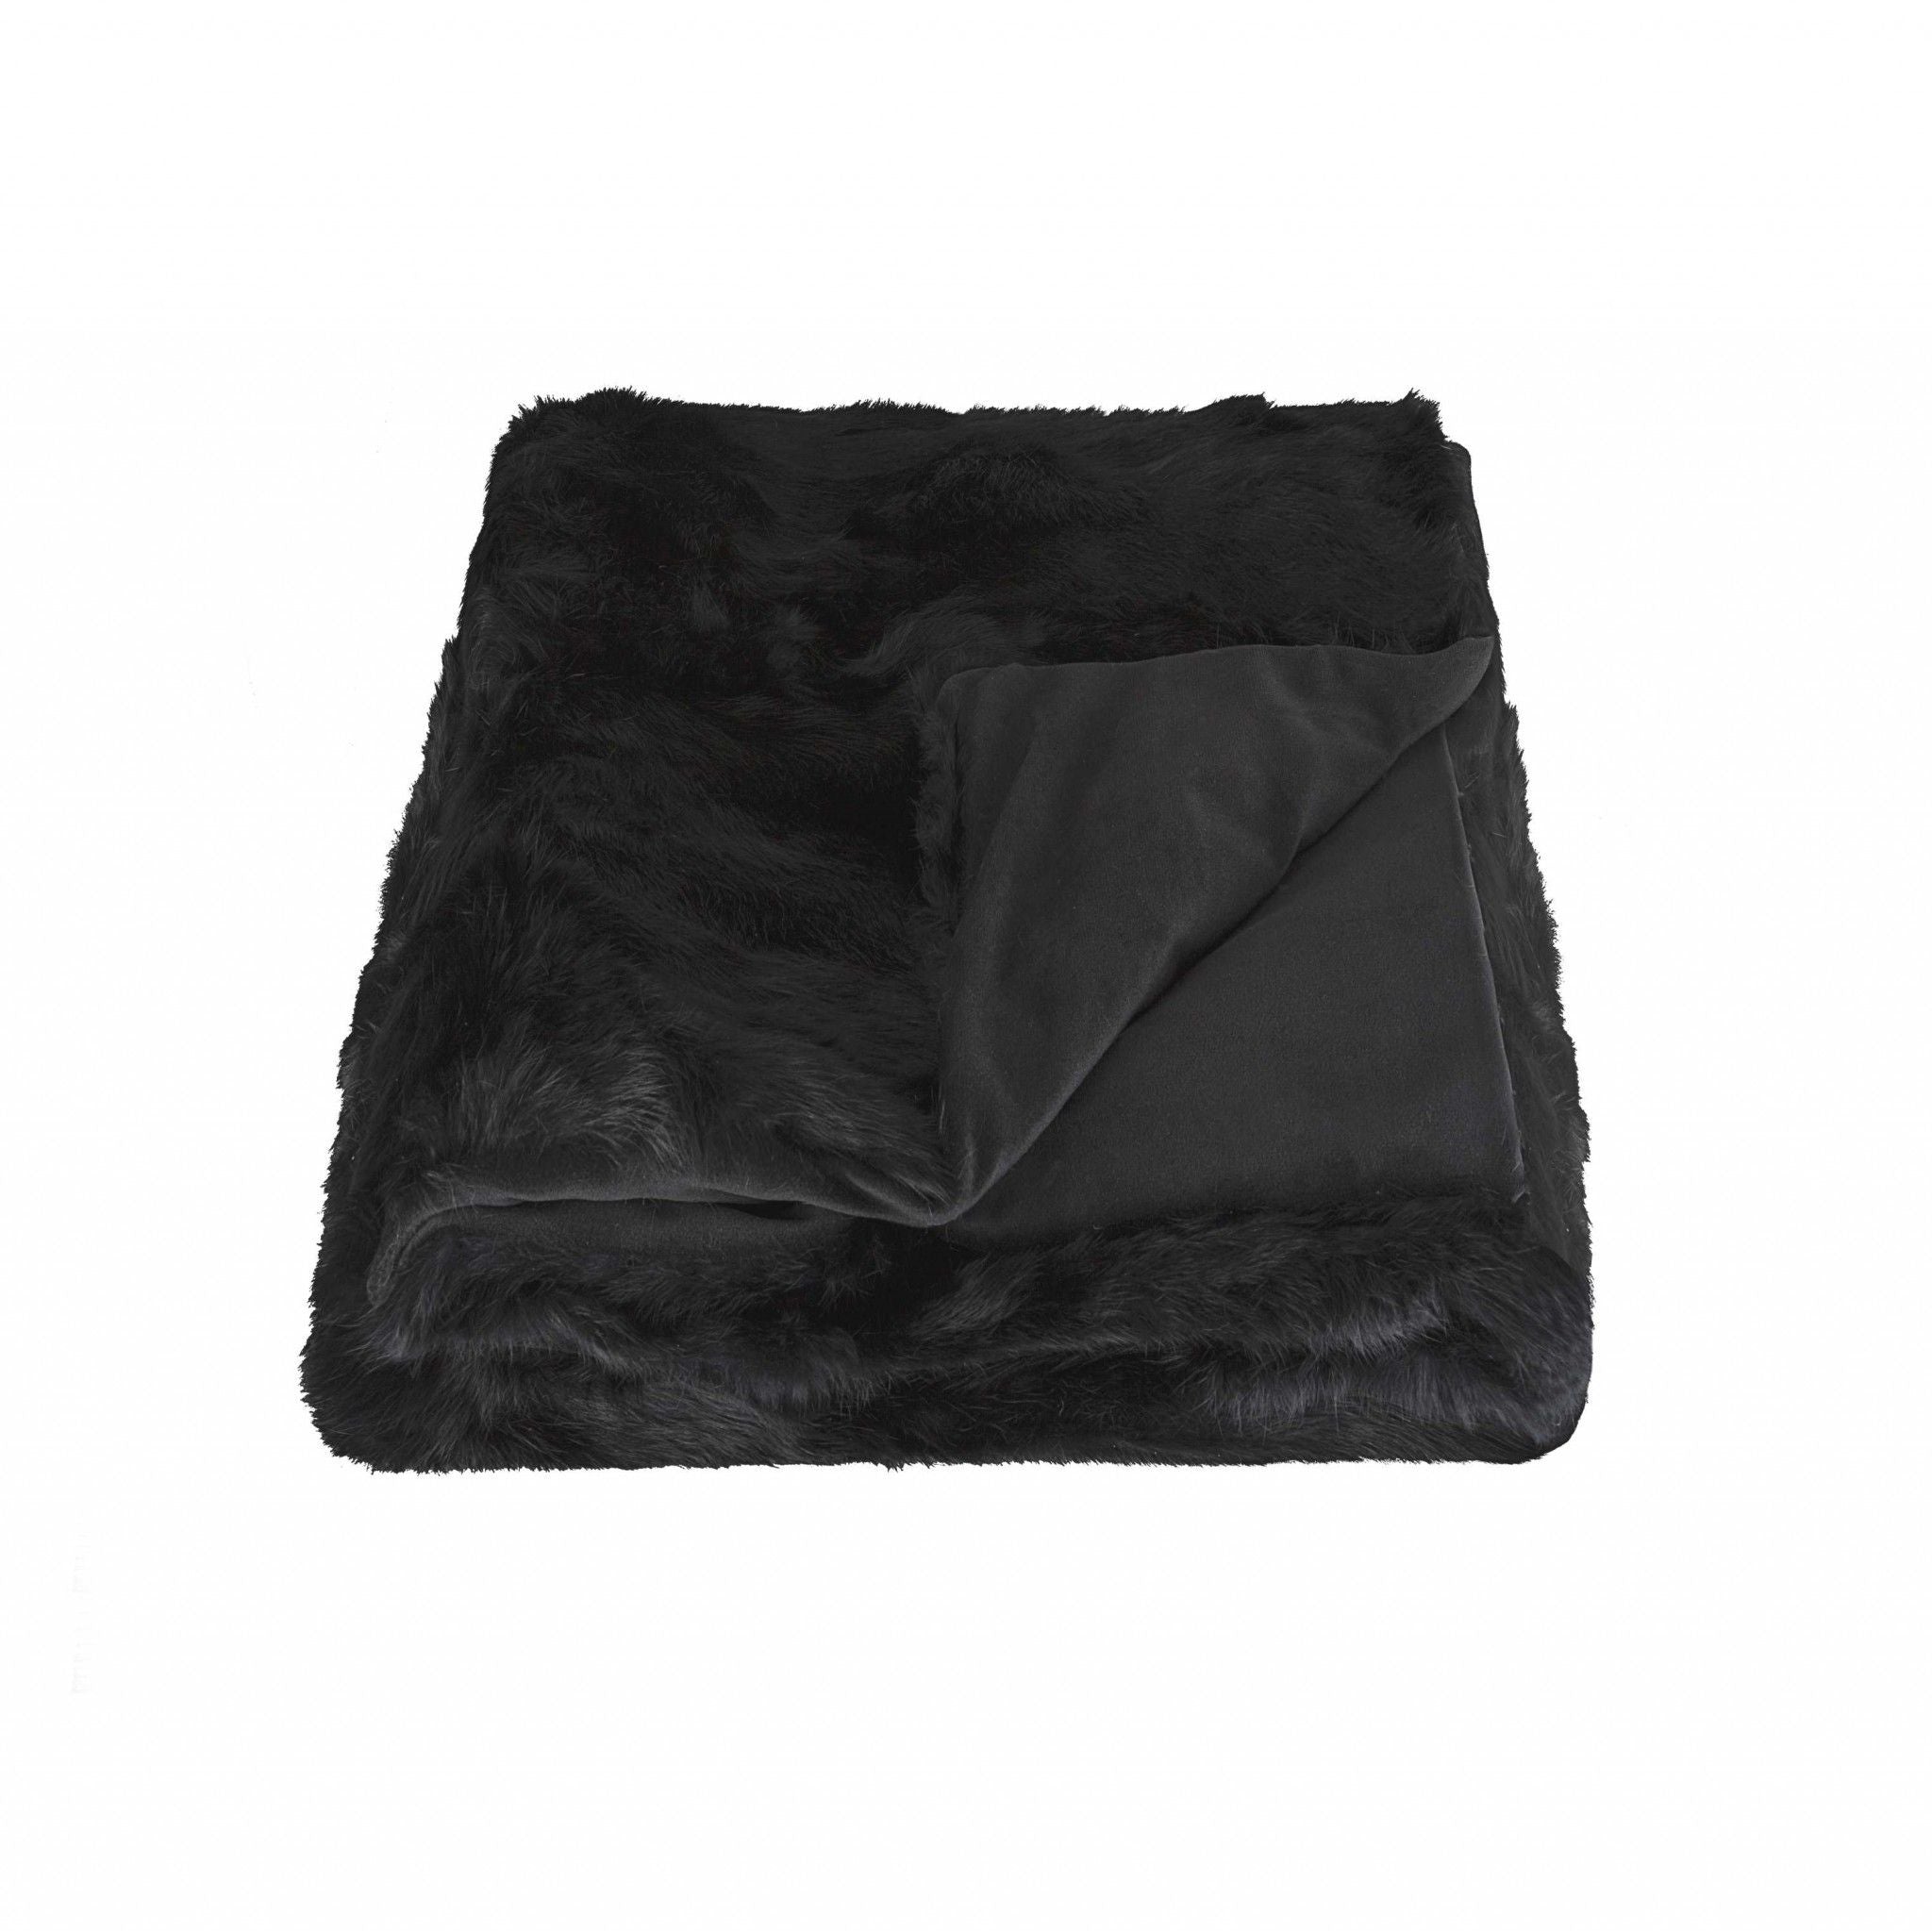 Natural Rabbit Fur Black Throw Blanket - Team Spirit Store USA 